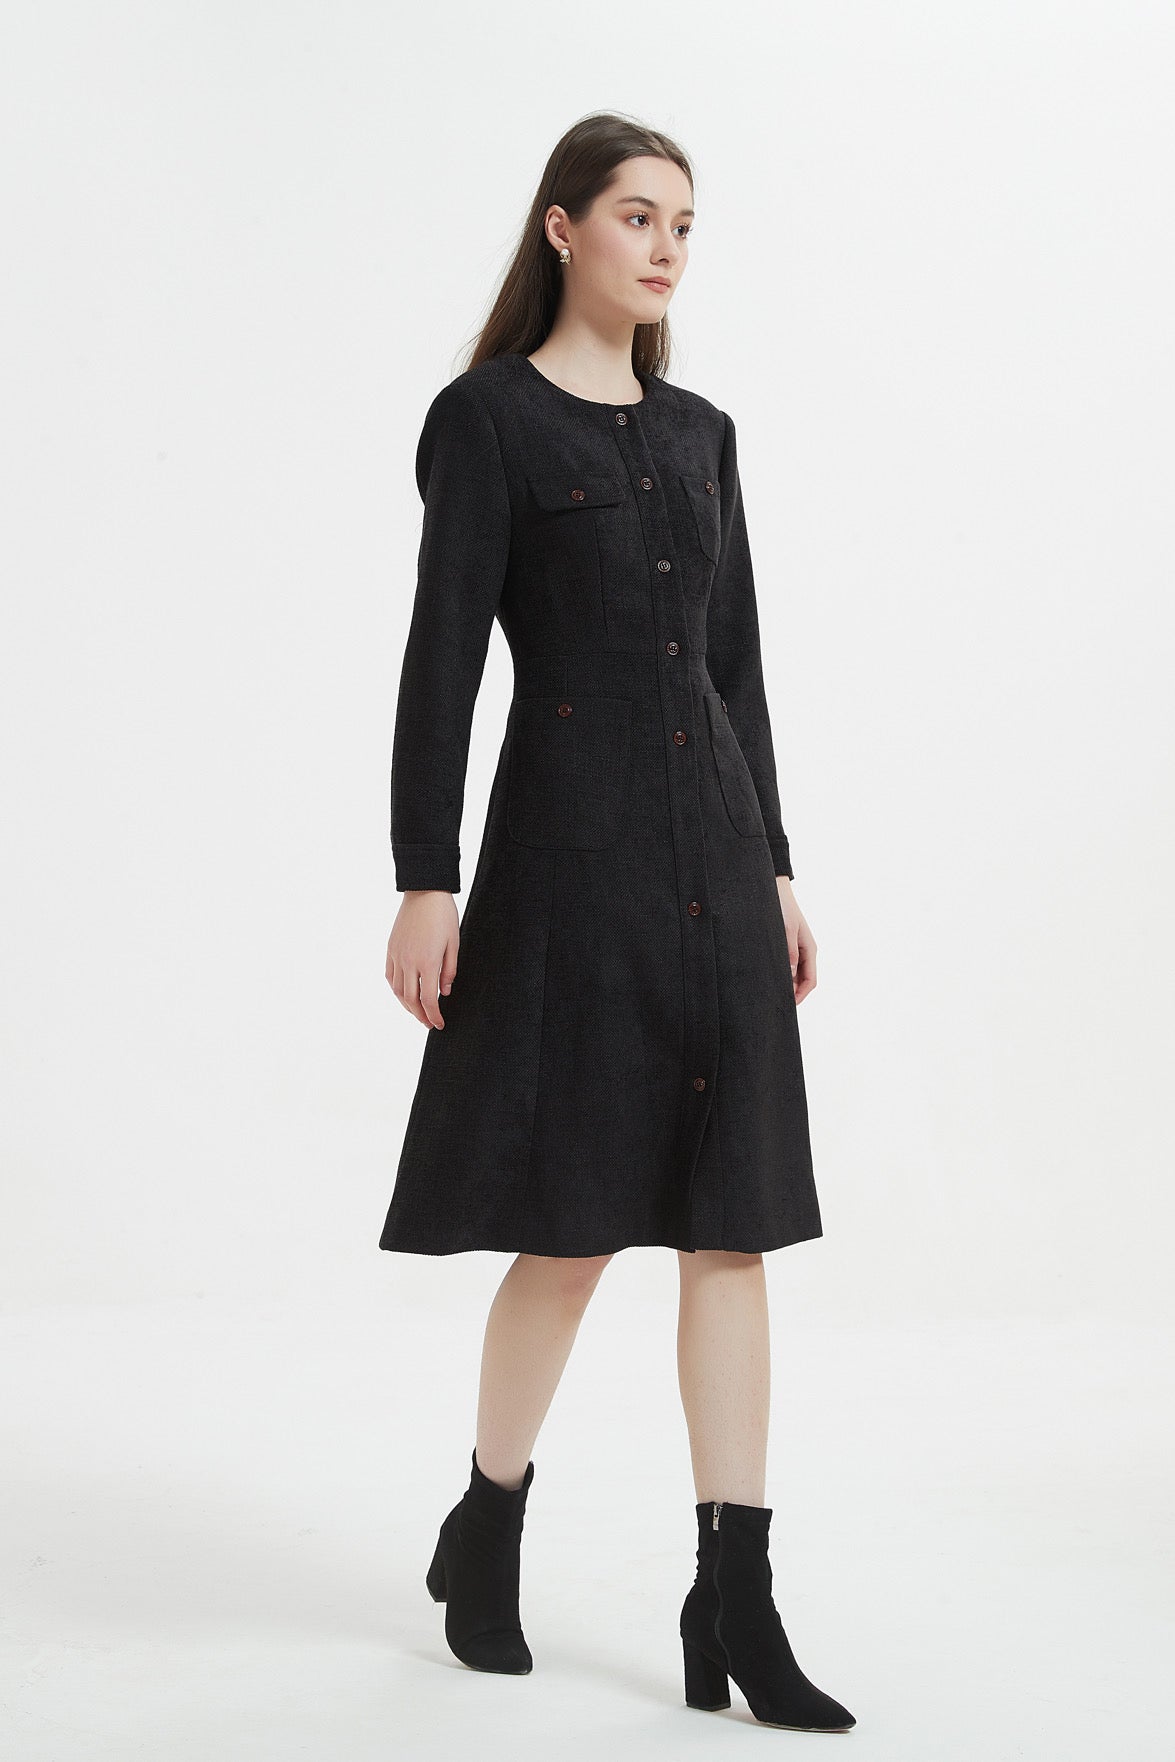 SKYE Shop Chic Modern Elegant Timeless Women Clothing French Parisian Minimalist Emilia Dress black 3